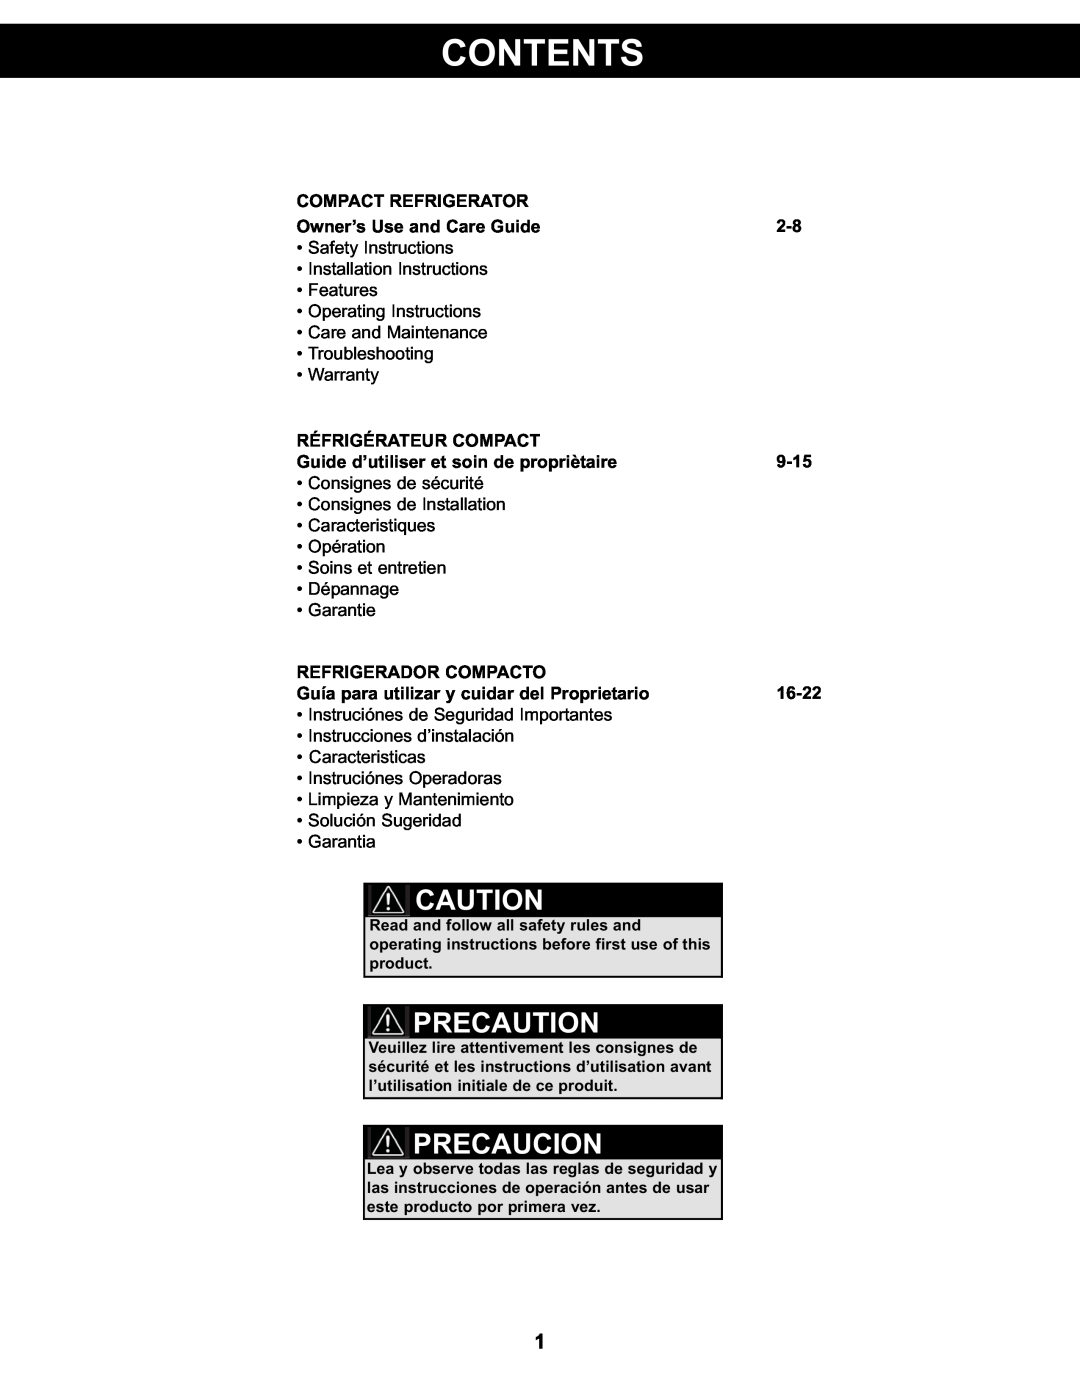 Danby DCR122BSLDD manual Contents, Precaution, Precaucion, Compact Refrigerator, Owner’s Use and Care Guide, 9-15, 16-22 